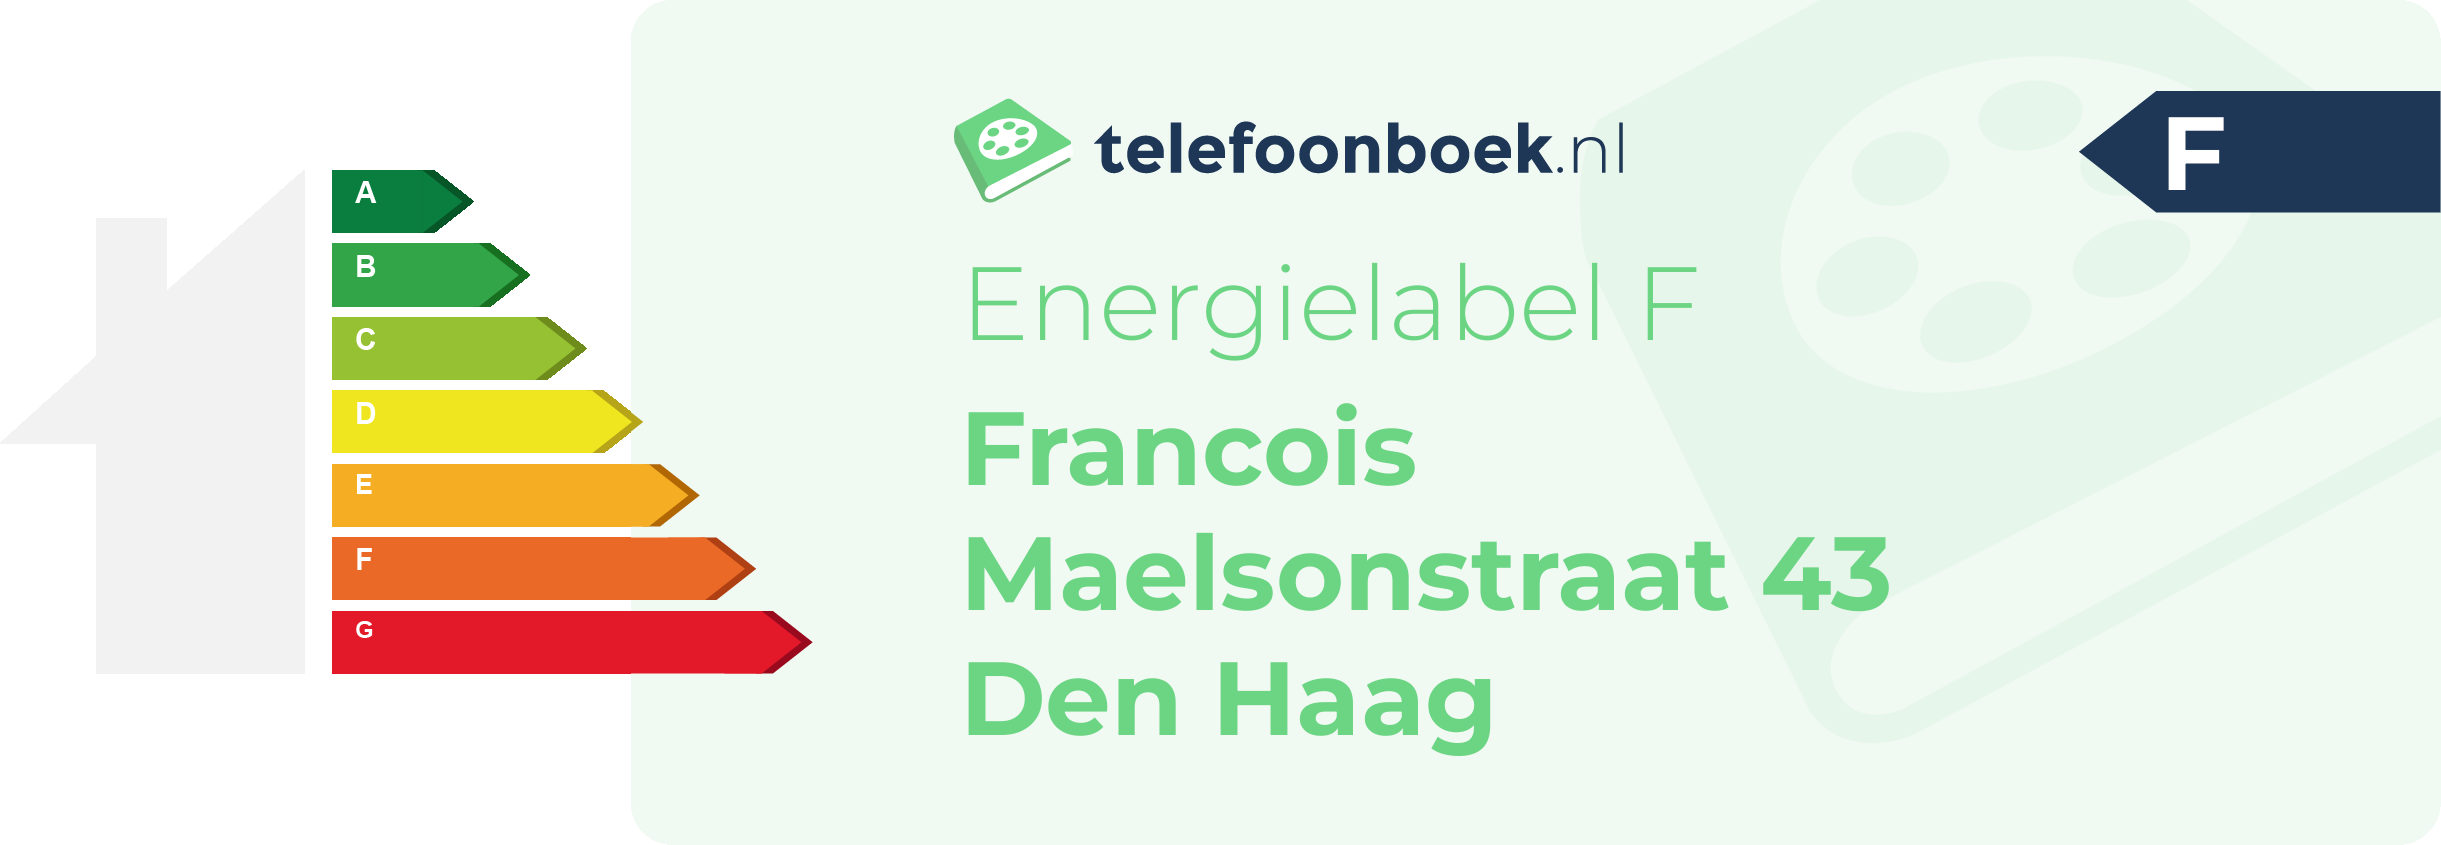 Energielabel Francois Maelsonstraat 43 Den Haag